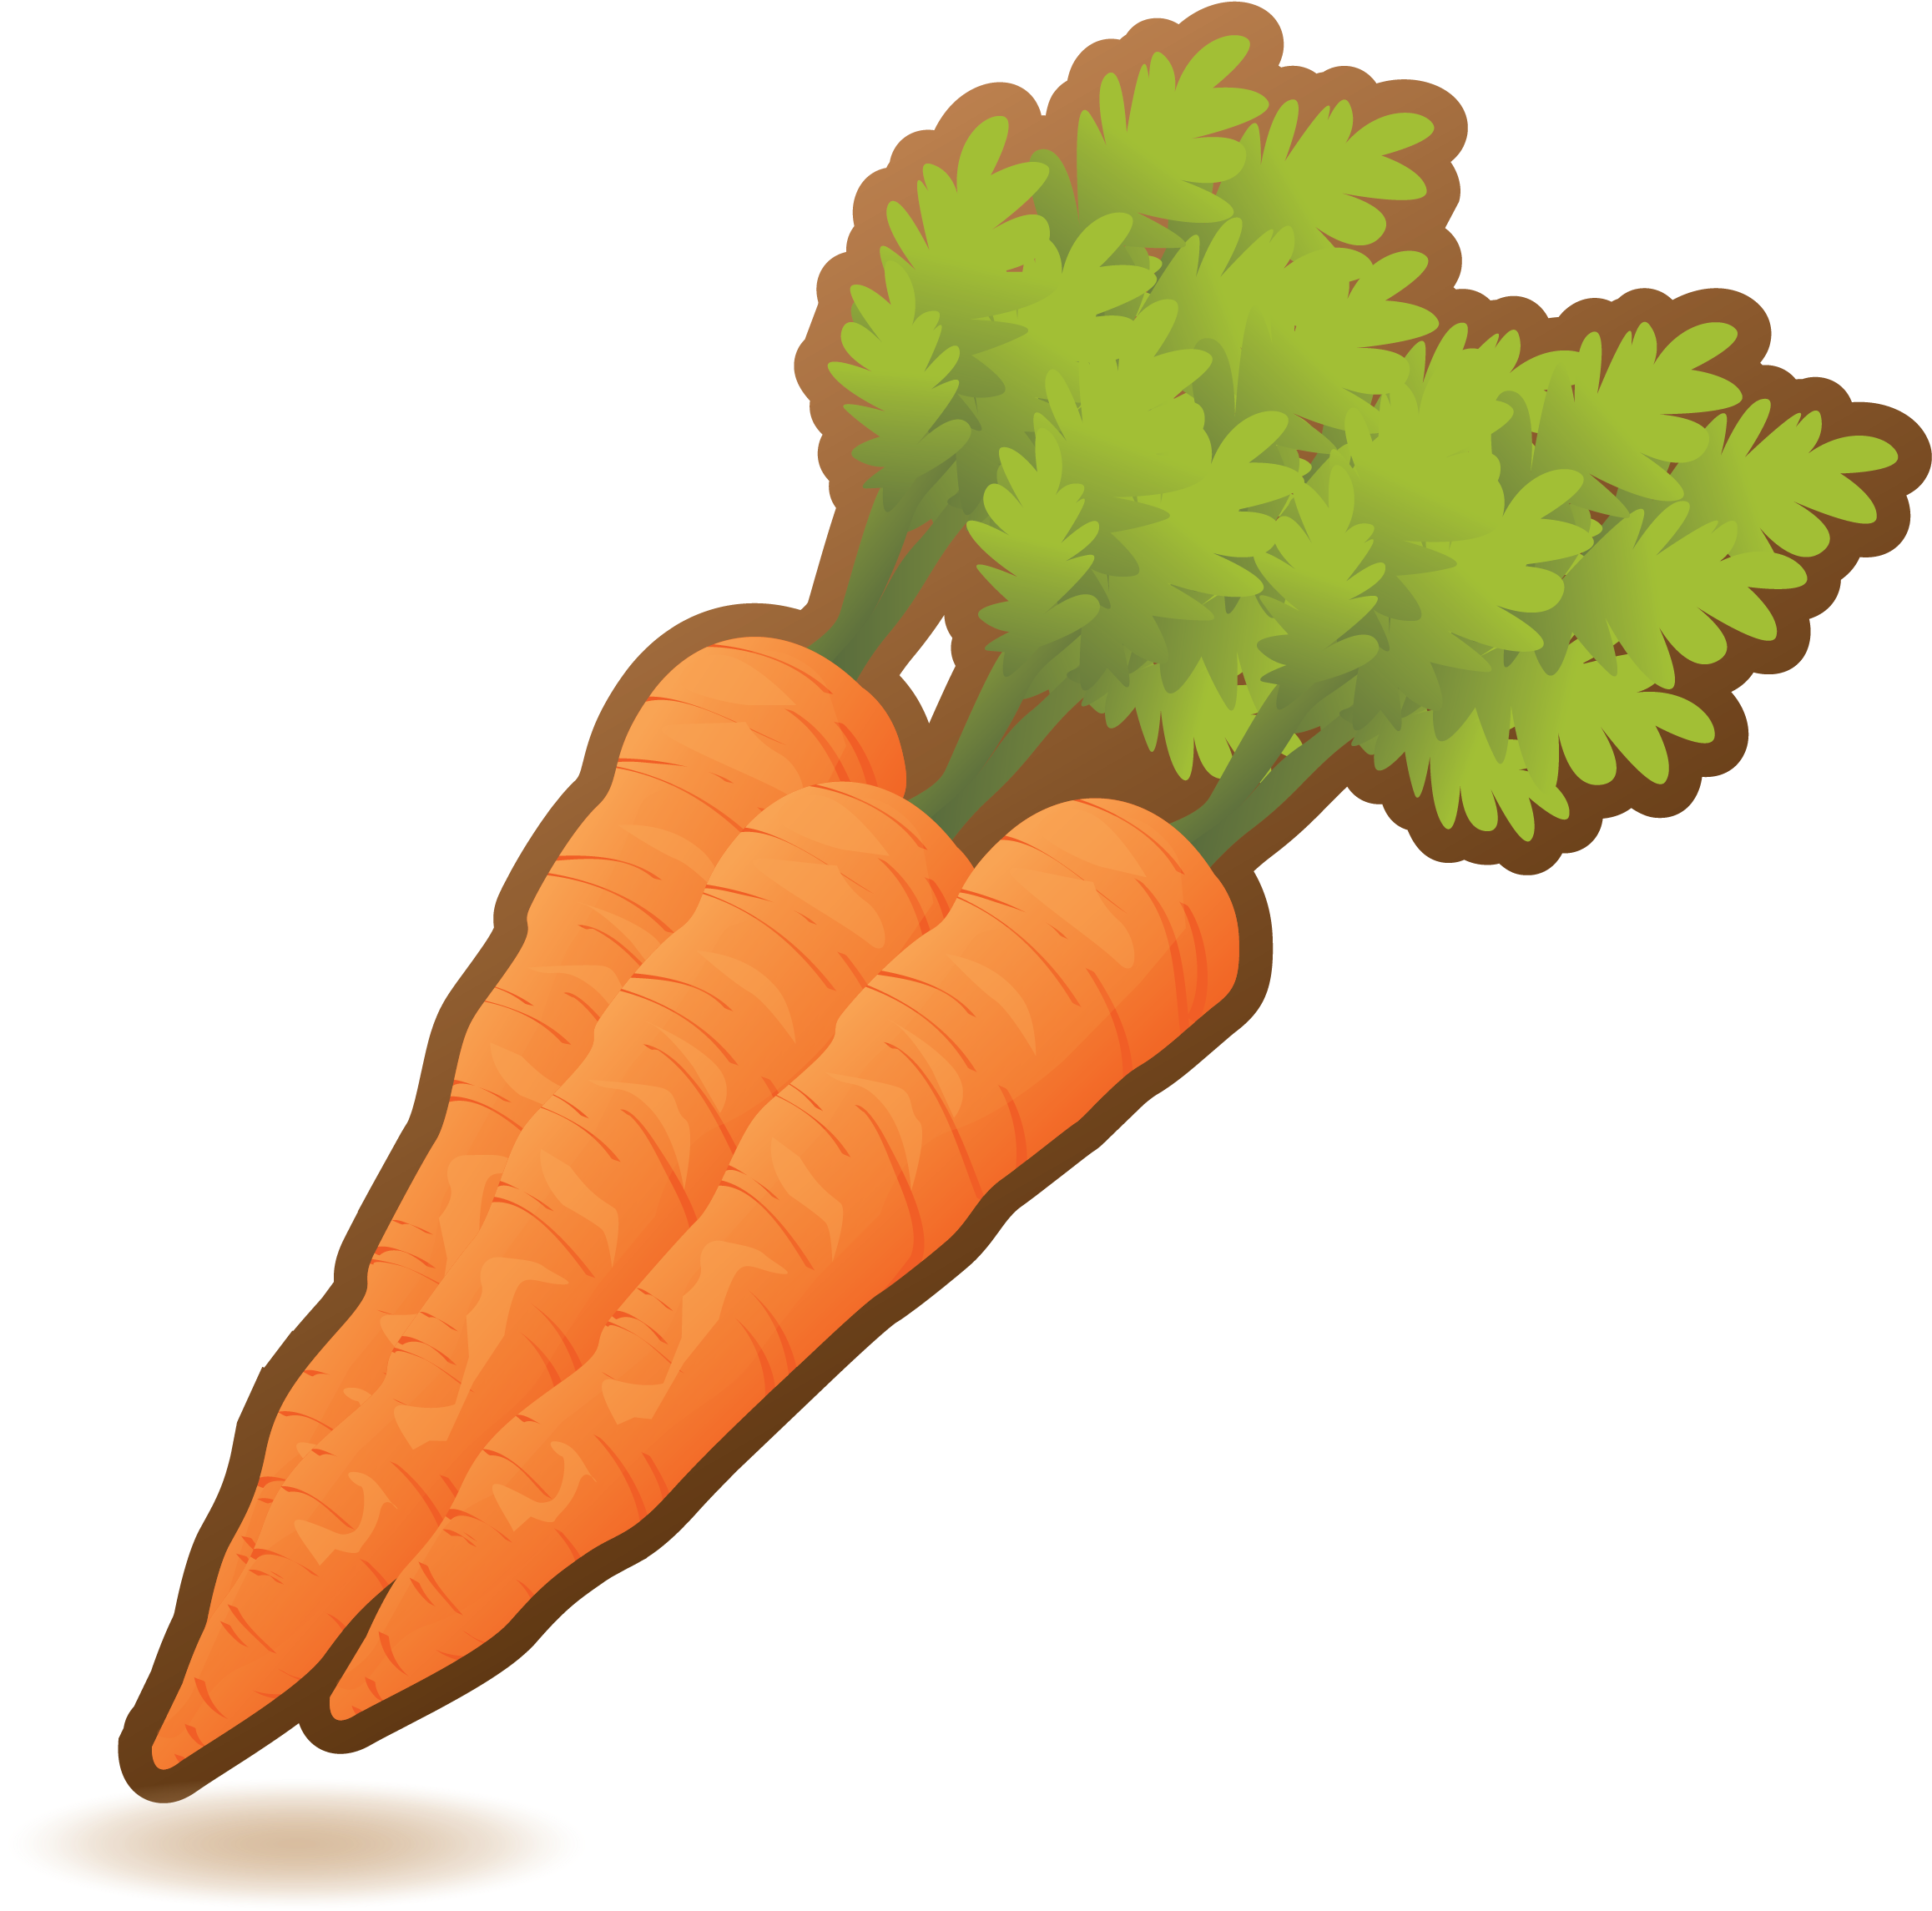 1414109 - Baby Carrot (2480x2480)